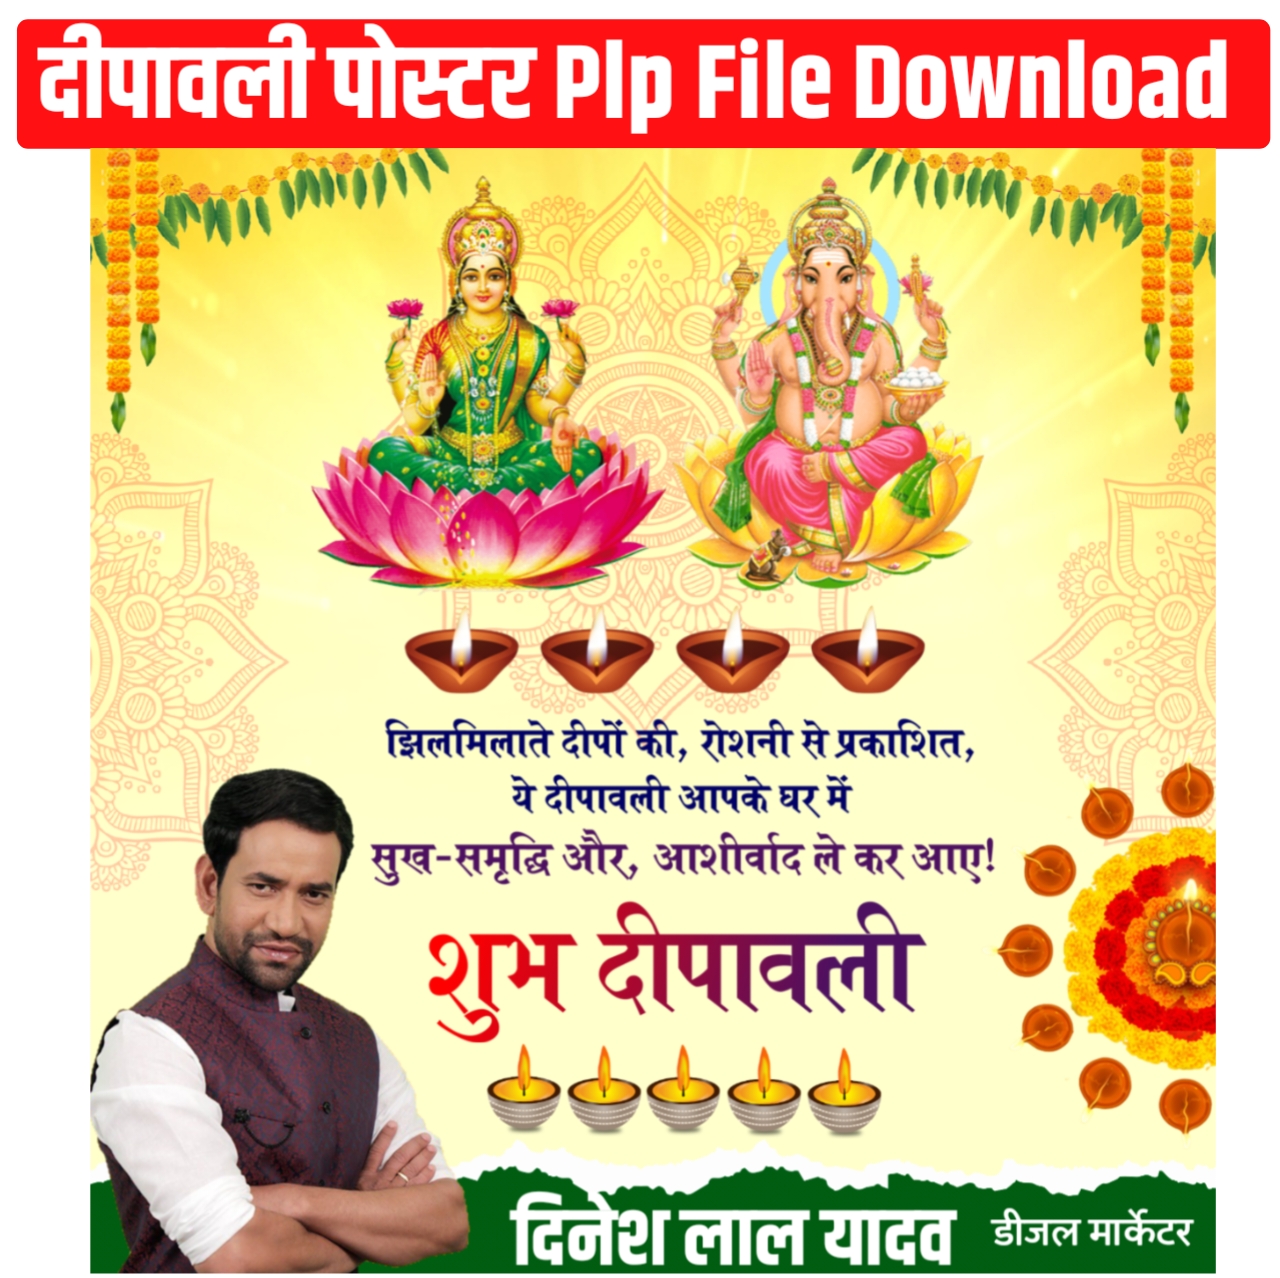 Diwali Poster Plp File KD Download